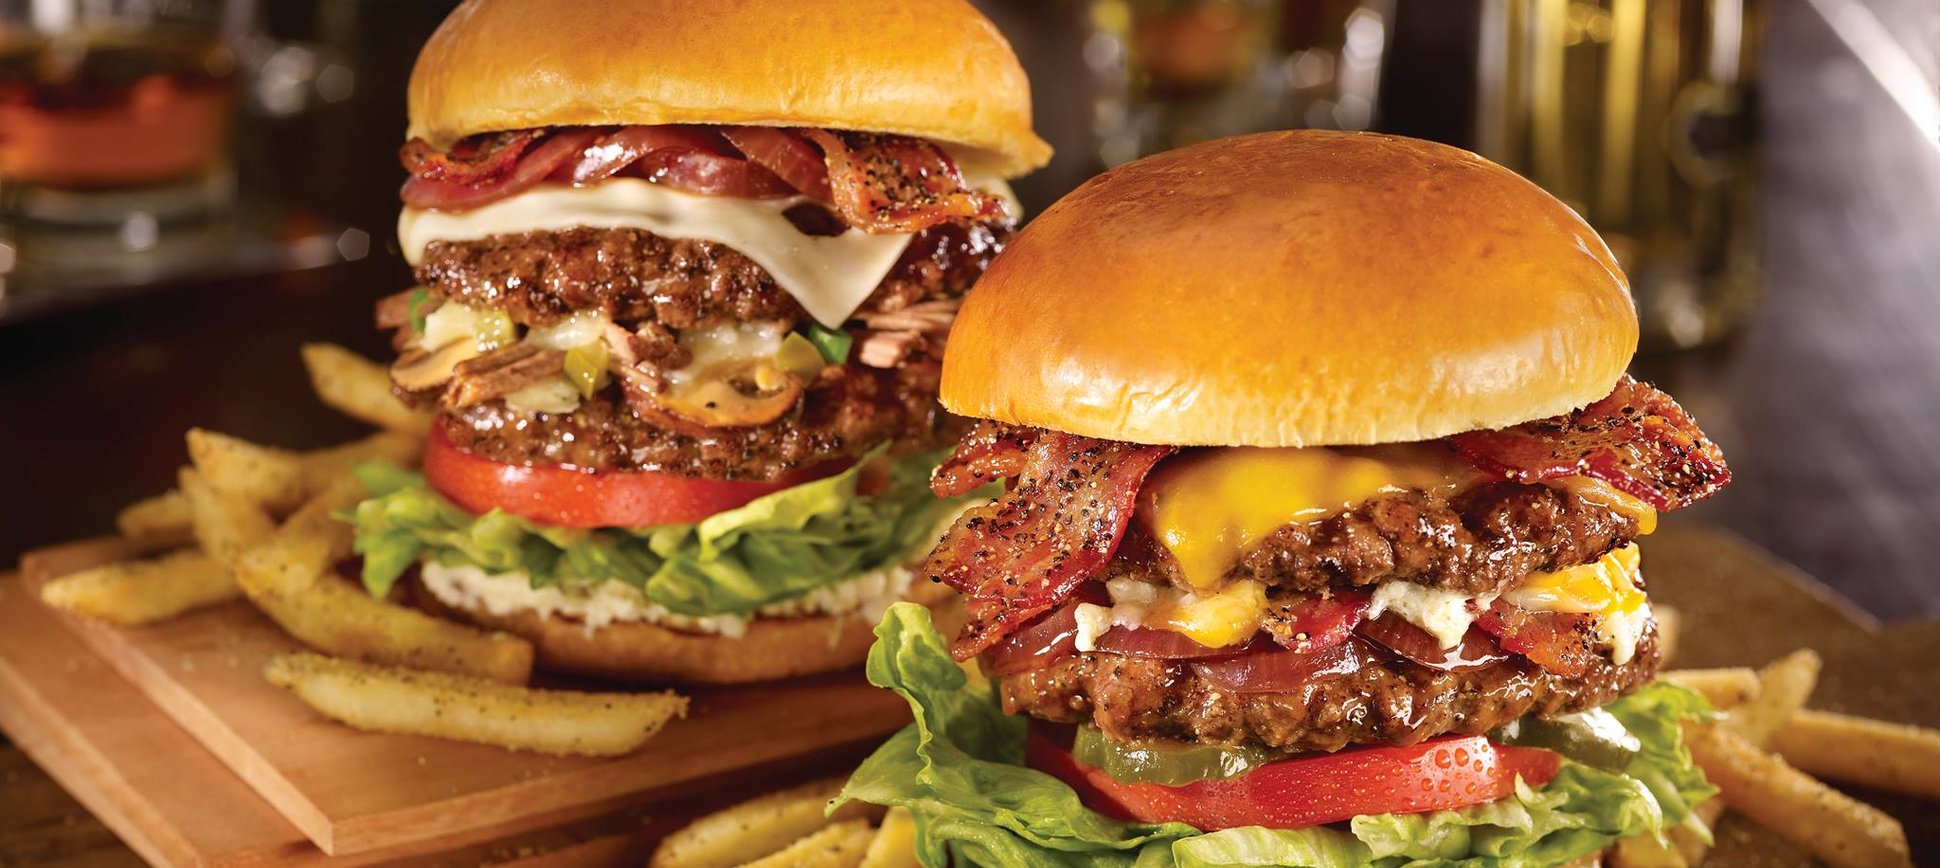 juicy-burger-chicago-at-mikkeys.jpg